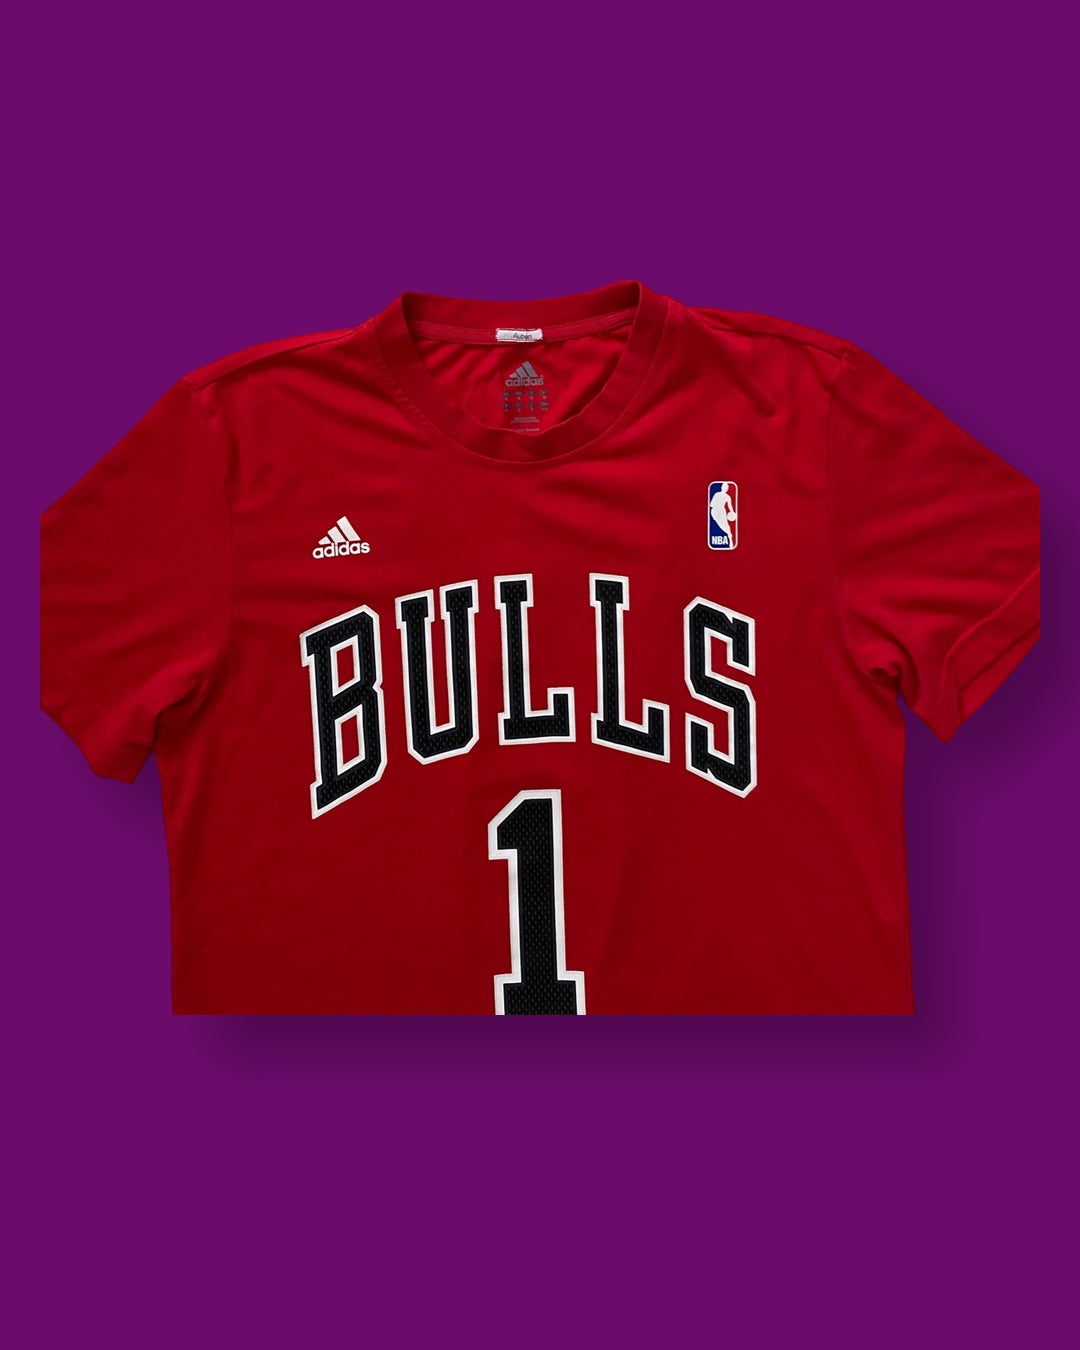 Adidas x NBA T-Shirt